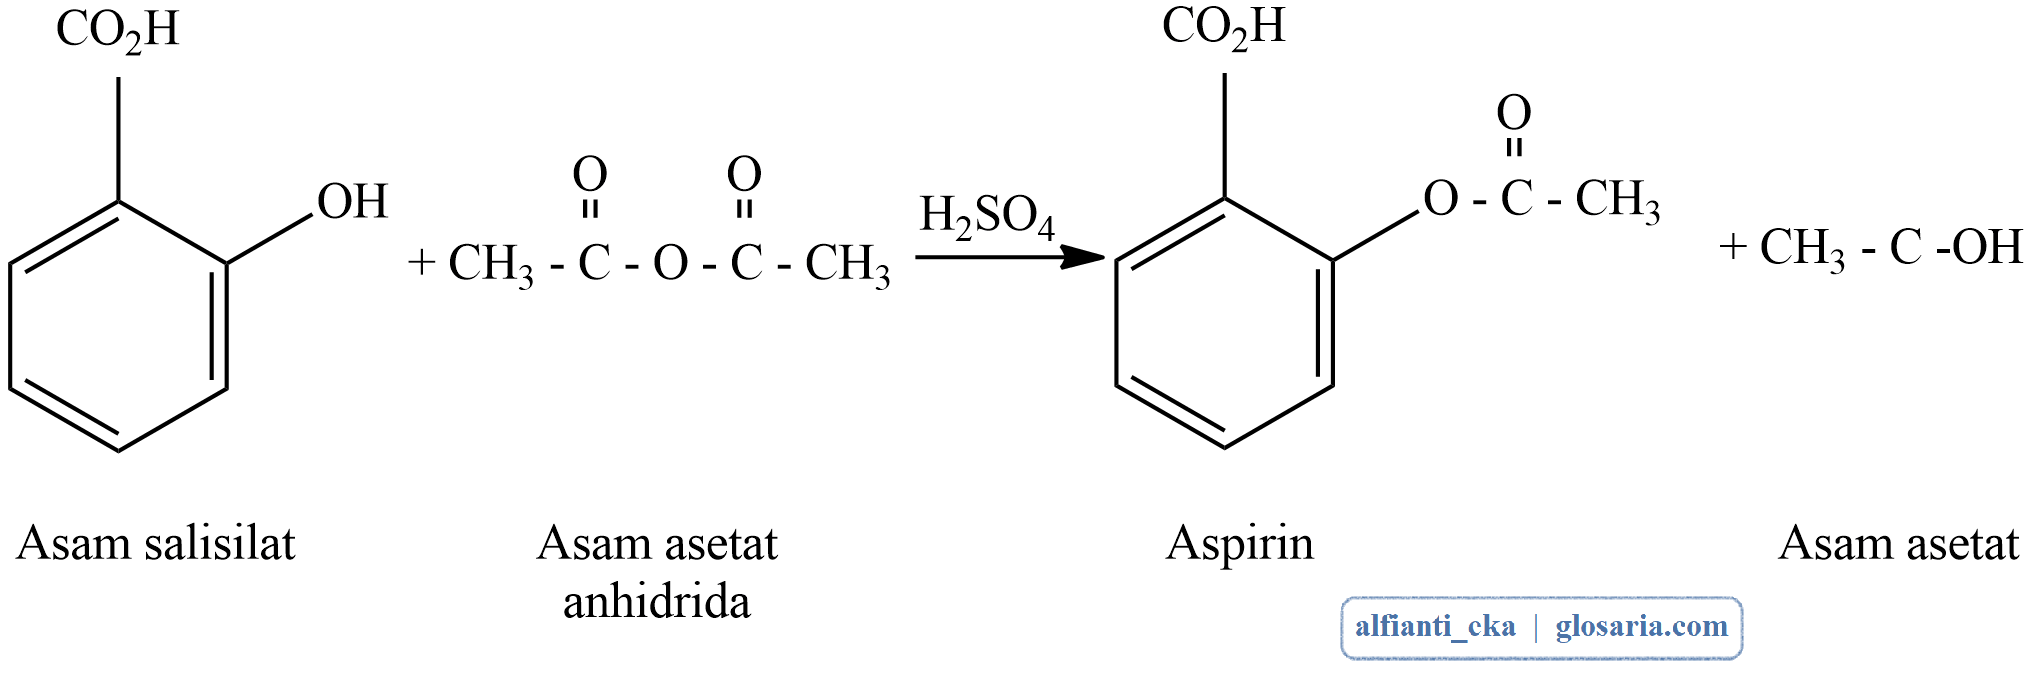 Аспирин владикавказ телефон. Аспирин химическая структура. Аспирин плюс Koh. Аспирин/парацетамол/кофеин.